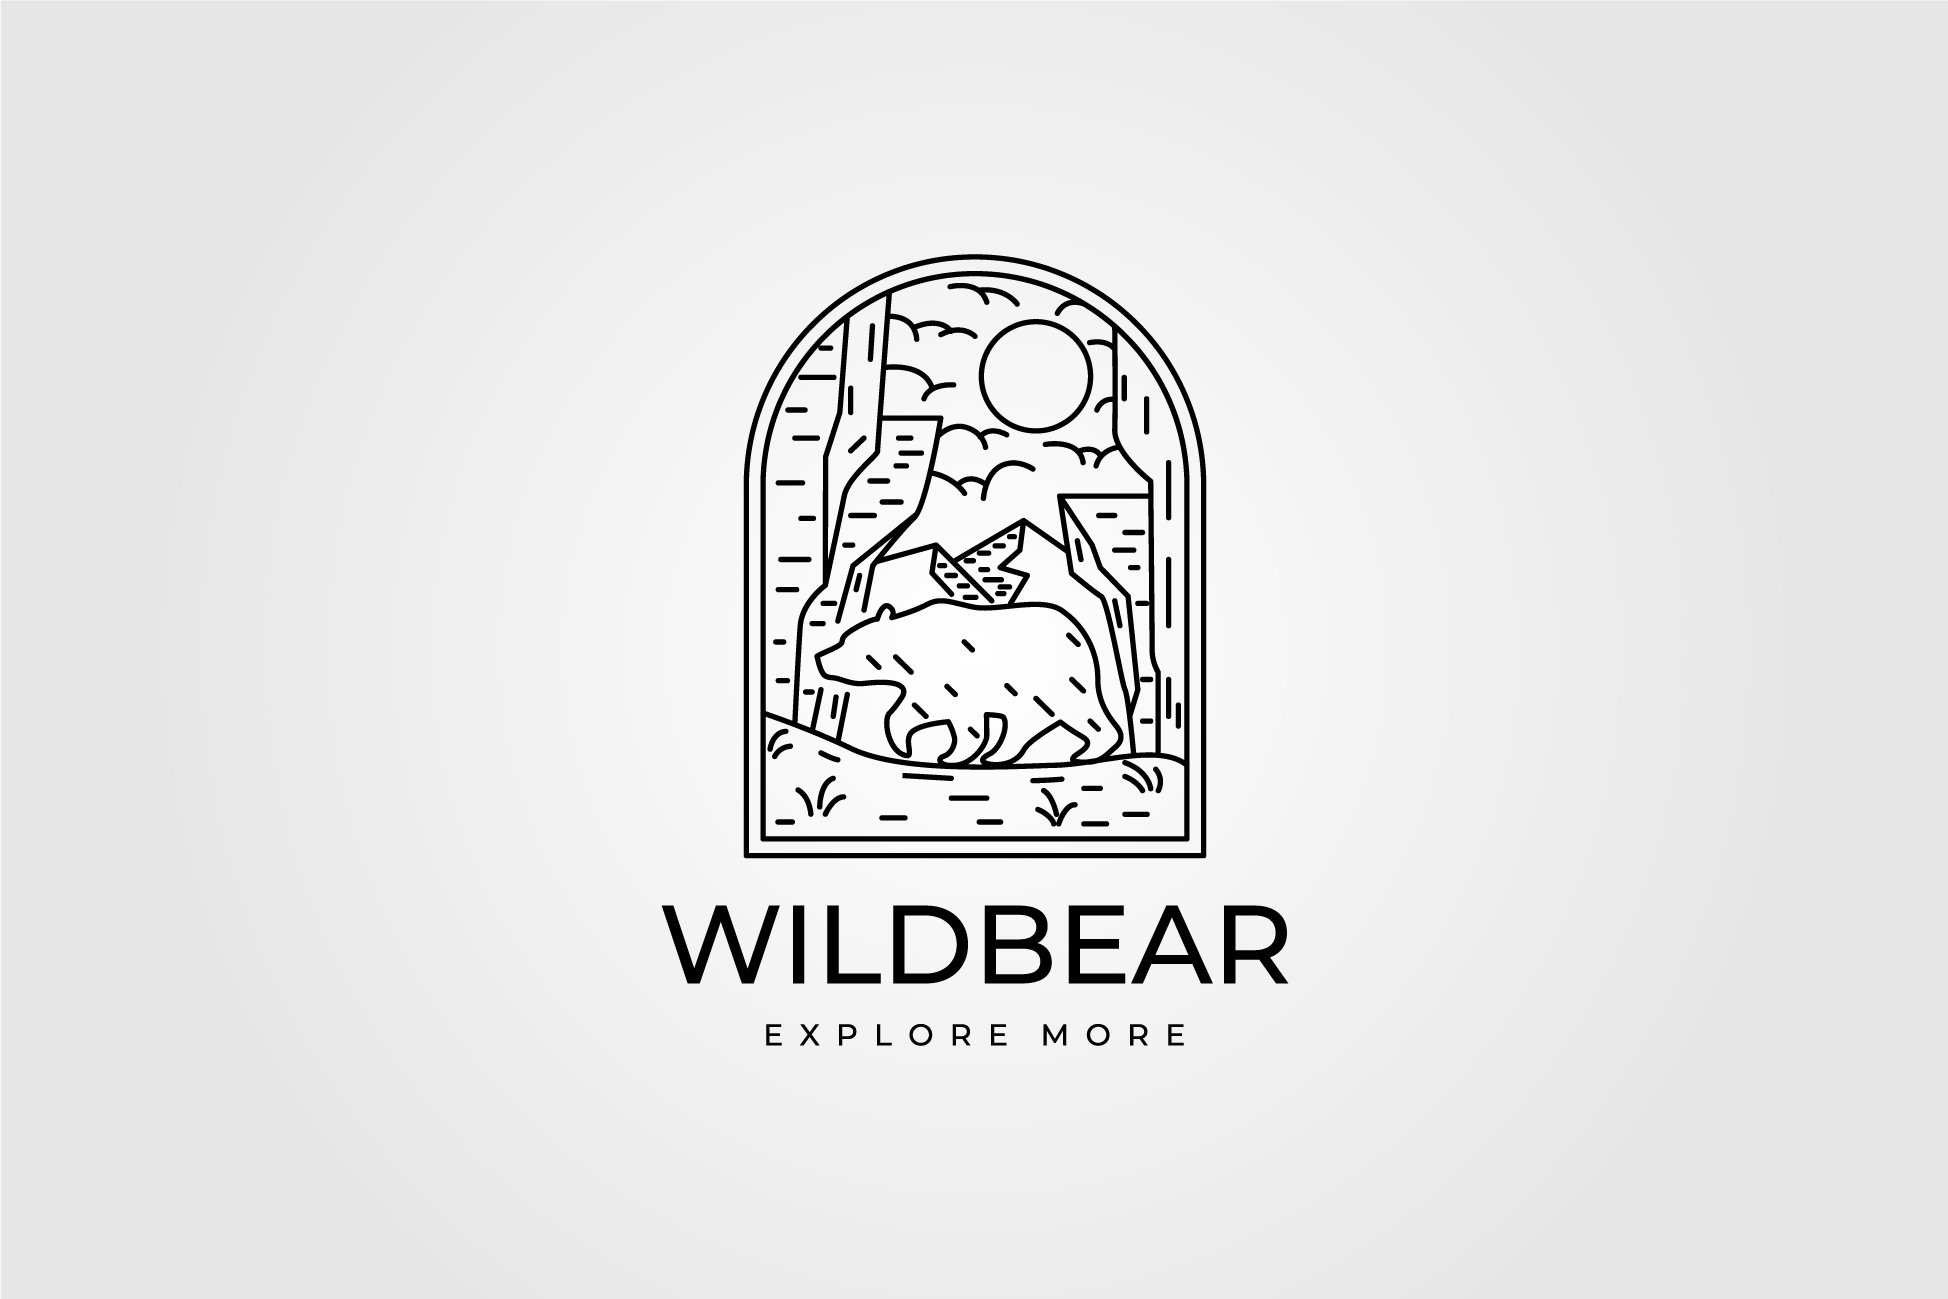 wild bear vintage outdoor logo cover image.